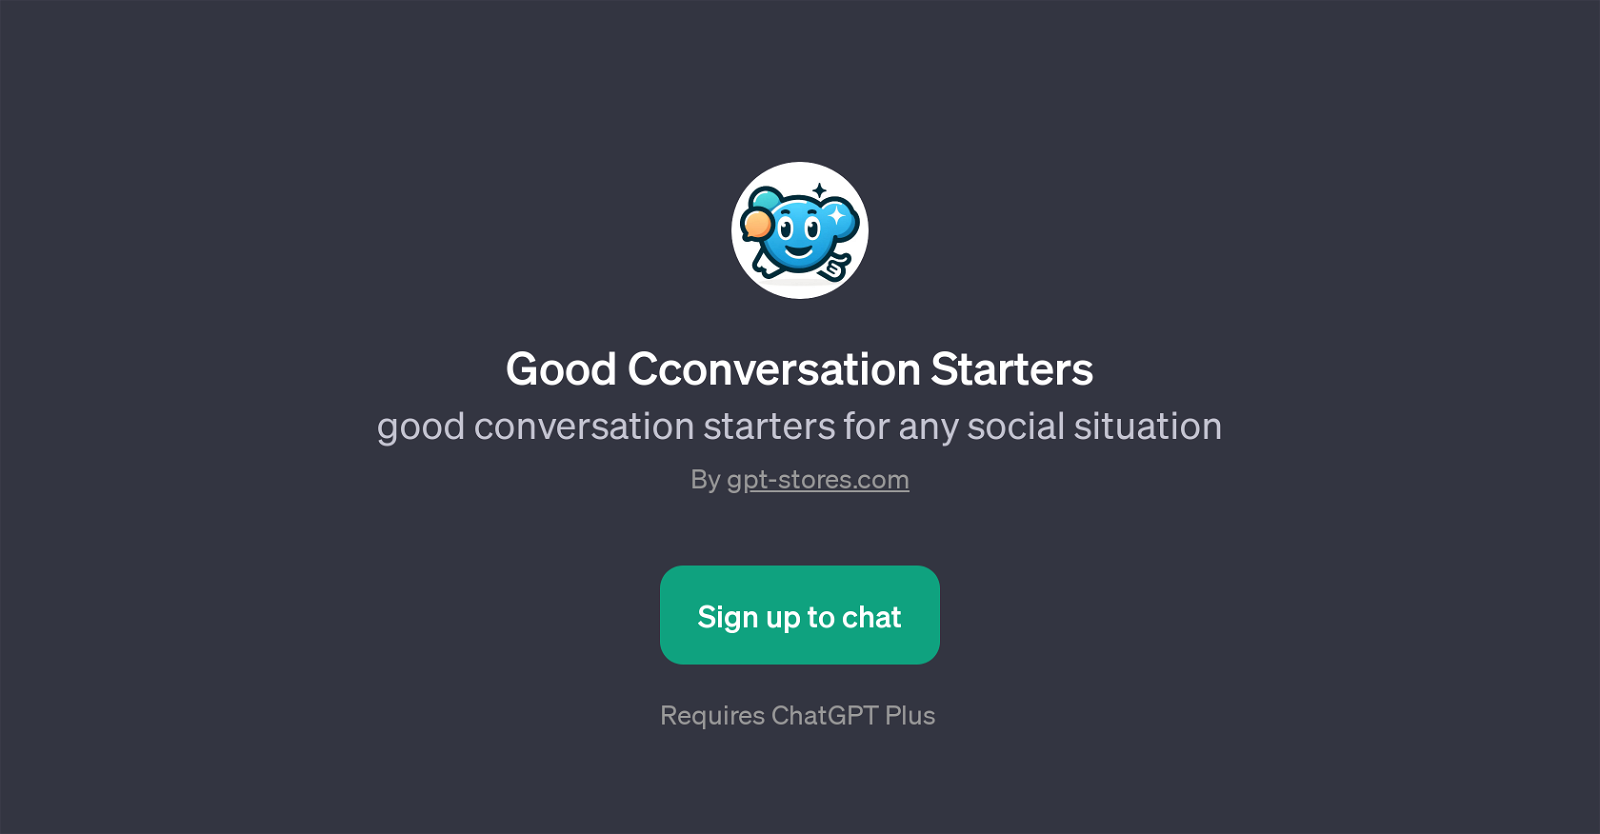 Good Conversation Starters website